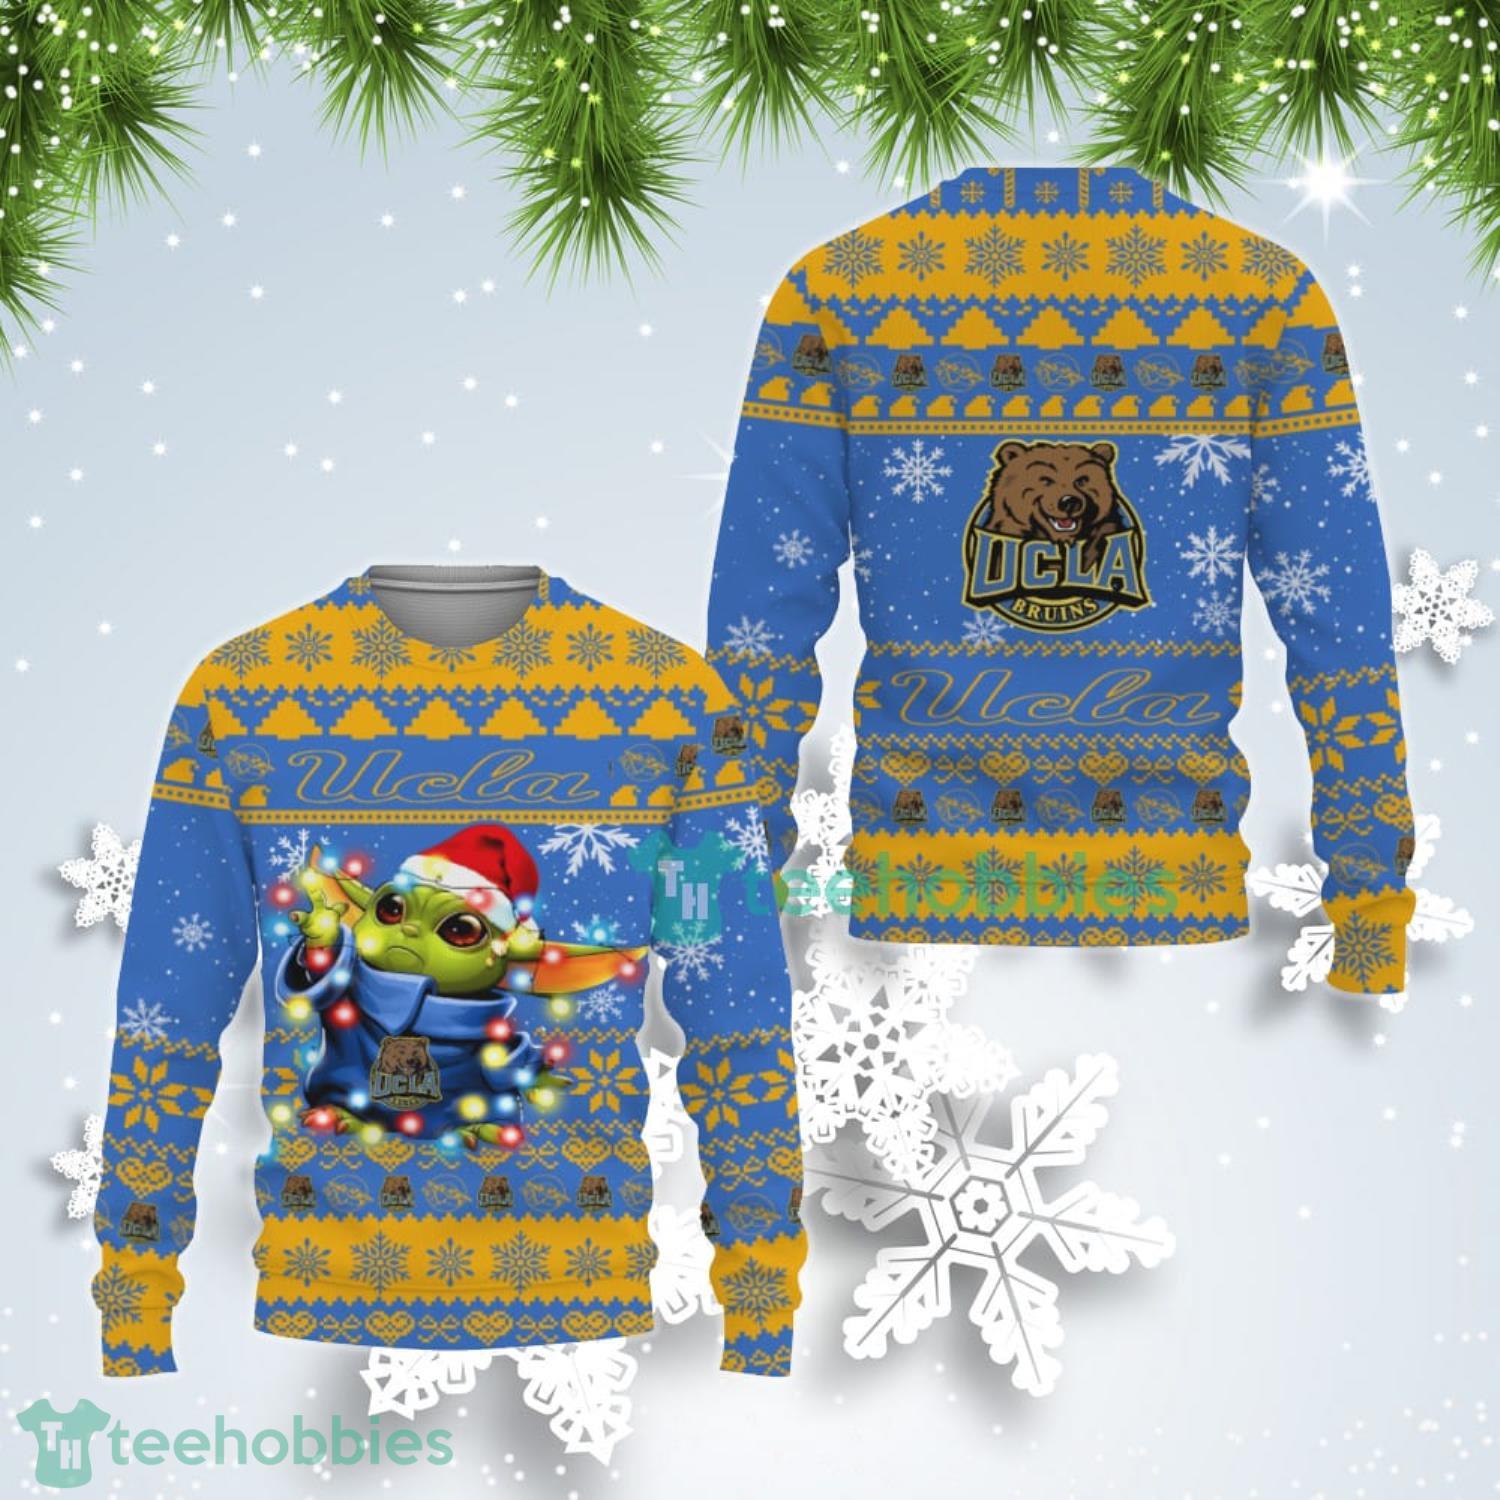 UCLA Bruins Cute Baby Yoda Star Wars Ugly Christmas Sweater Product Photo 1